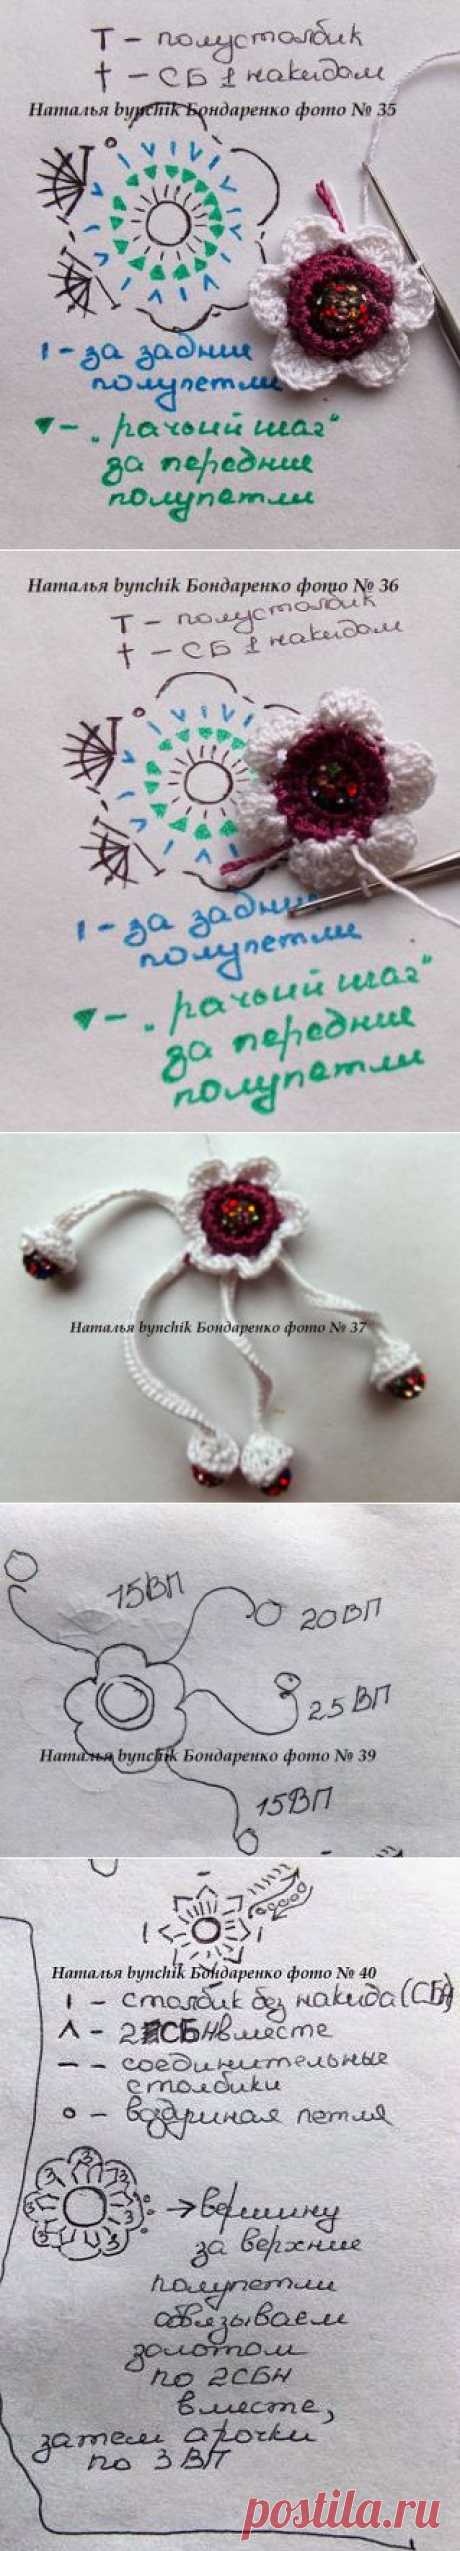 Irish crochet &amp;: Цветок и листик от Натальи Бондаренко. МК.